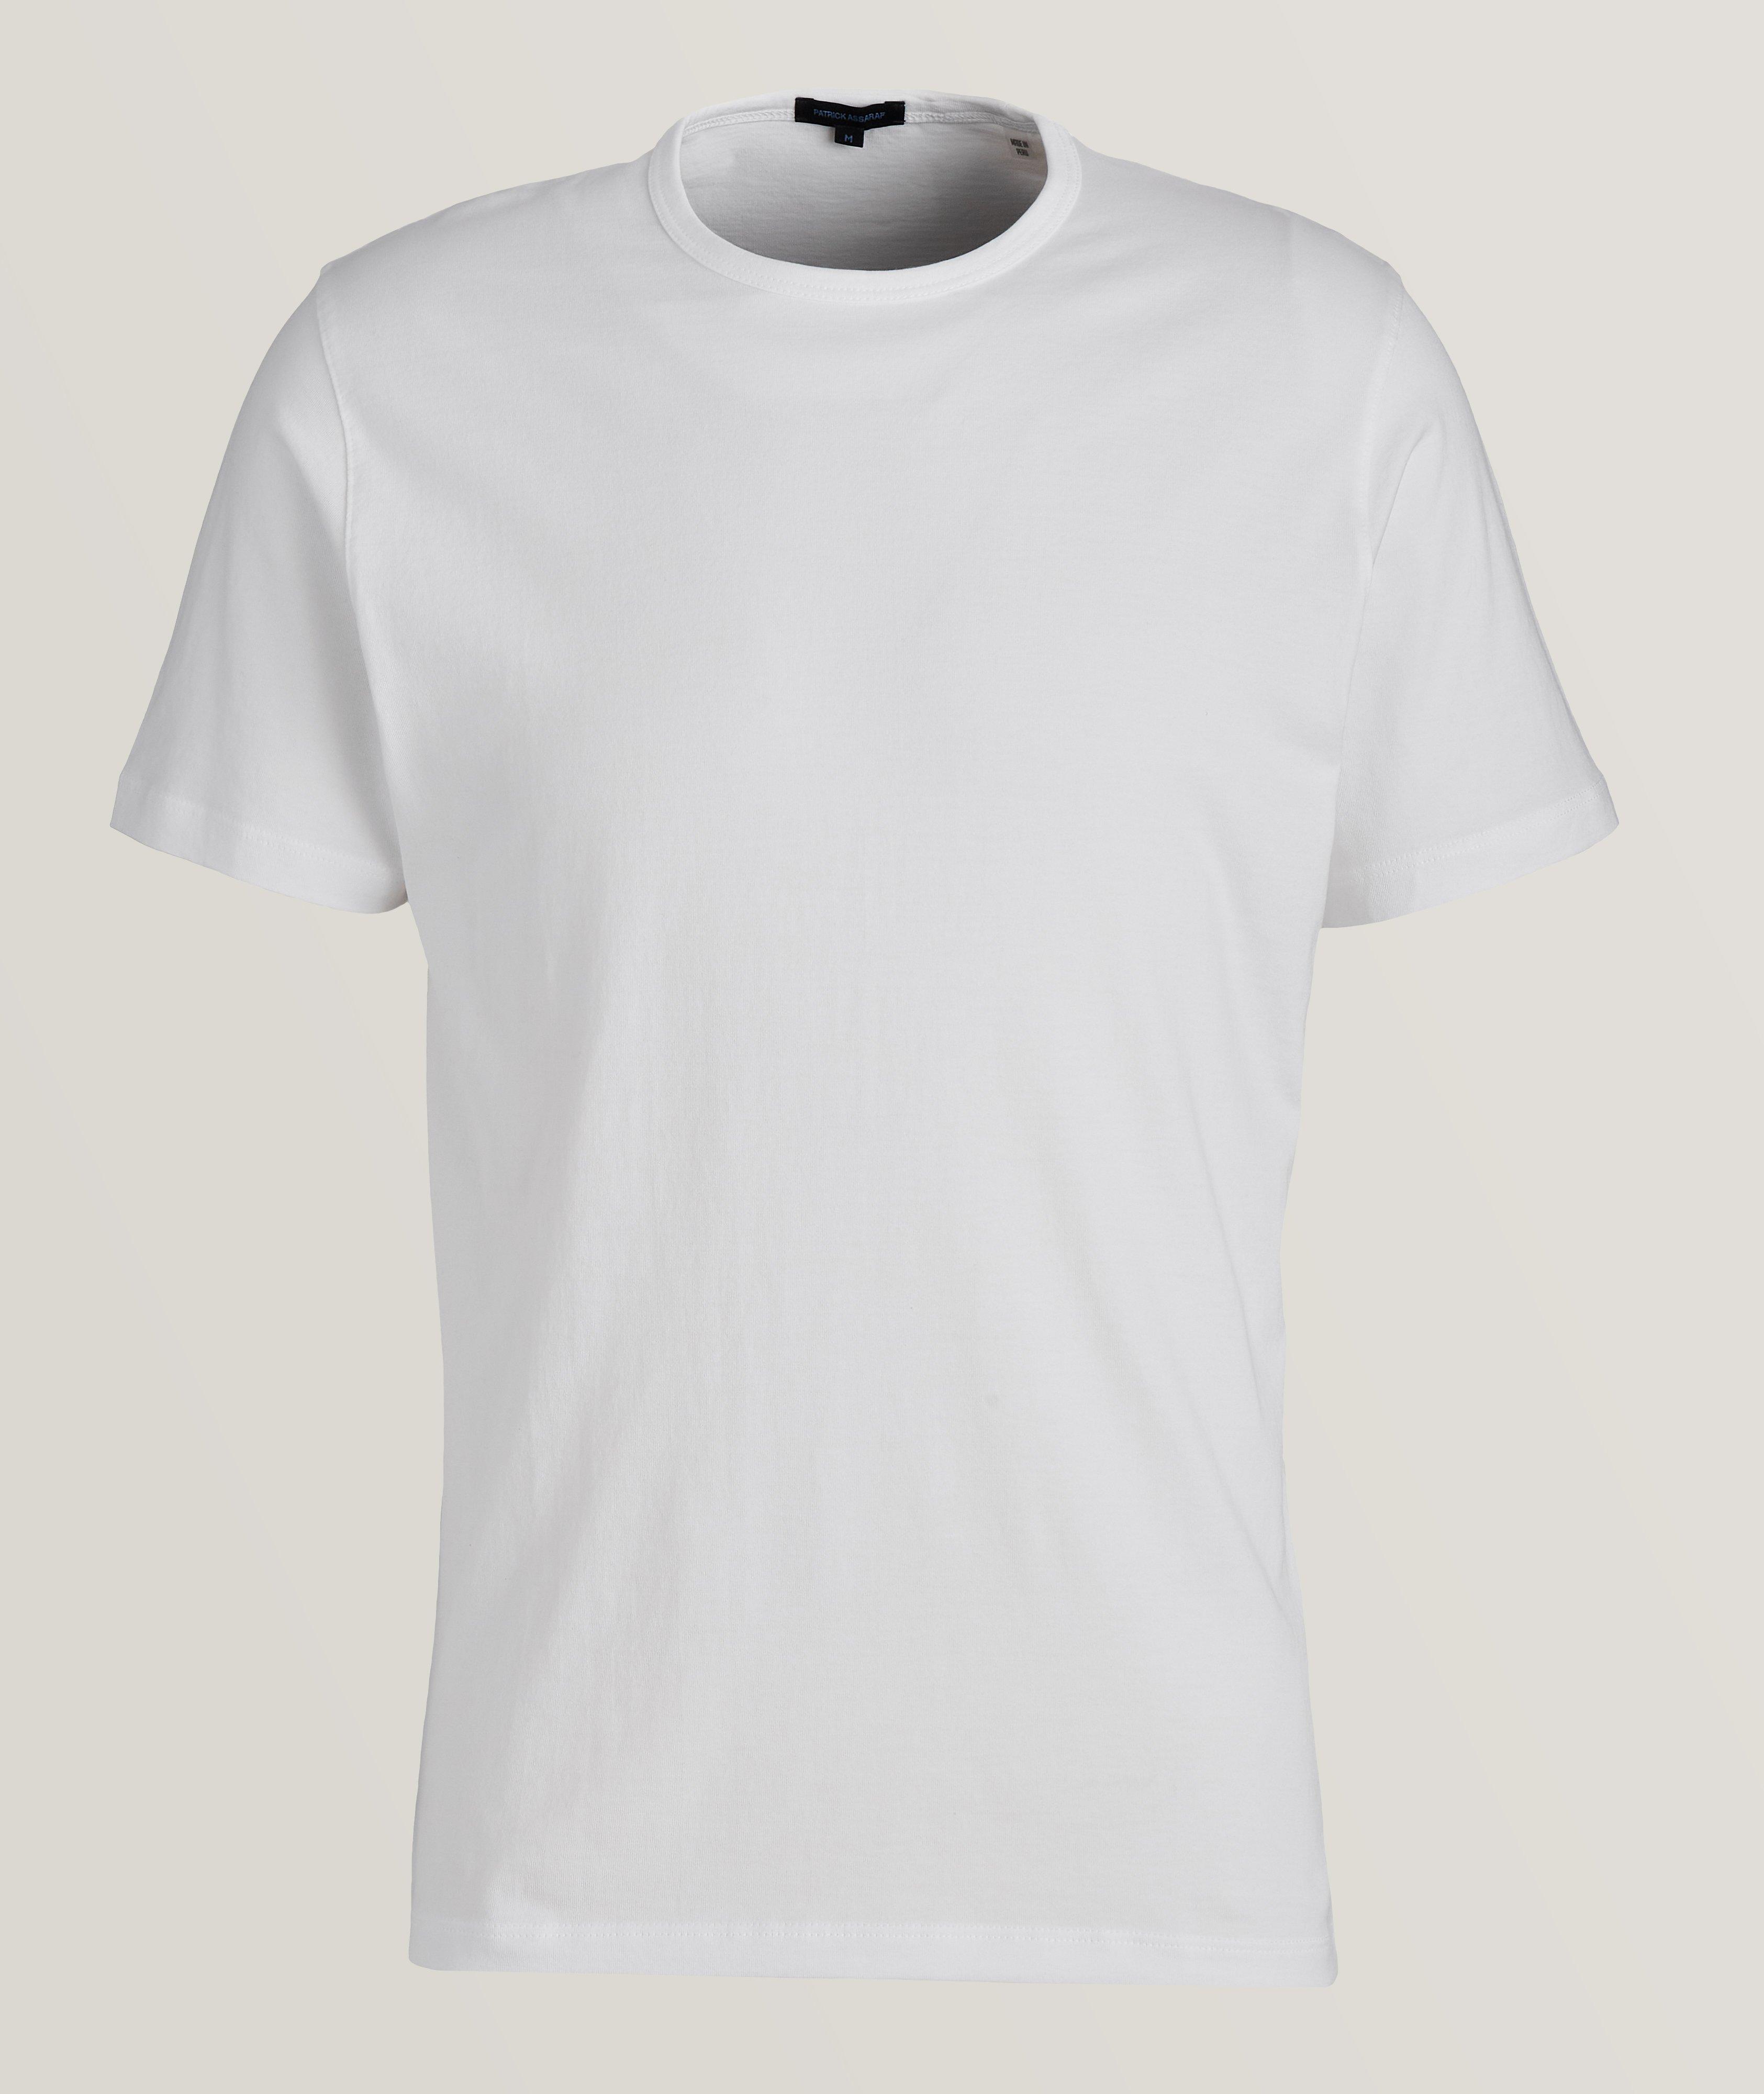 Pima Stretch-Cotton Crewneck T-Shirt image 0